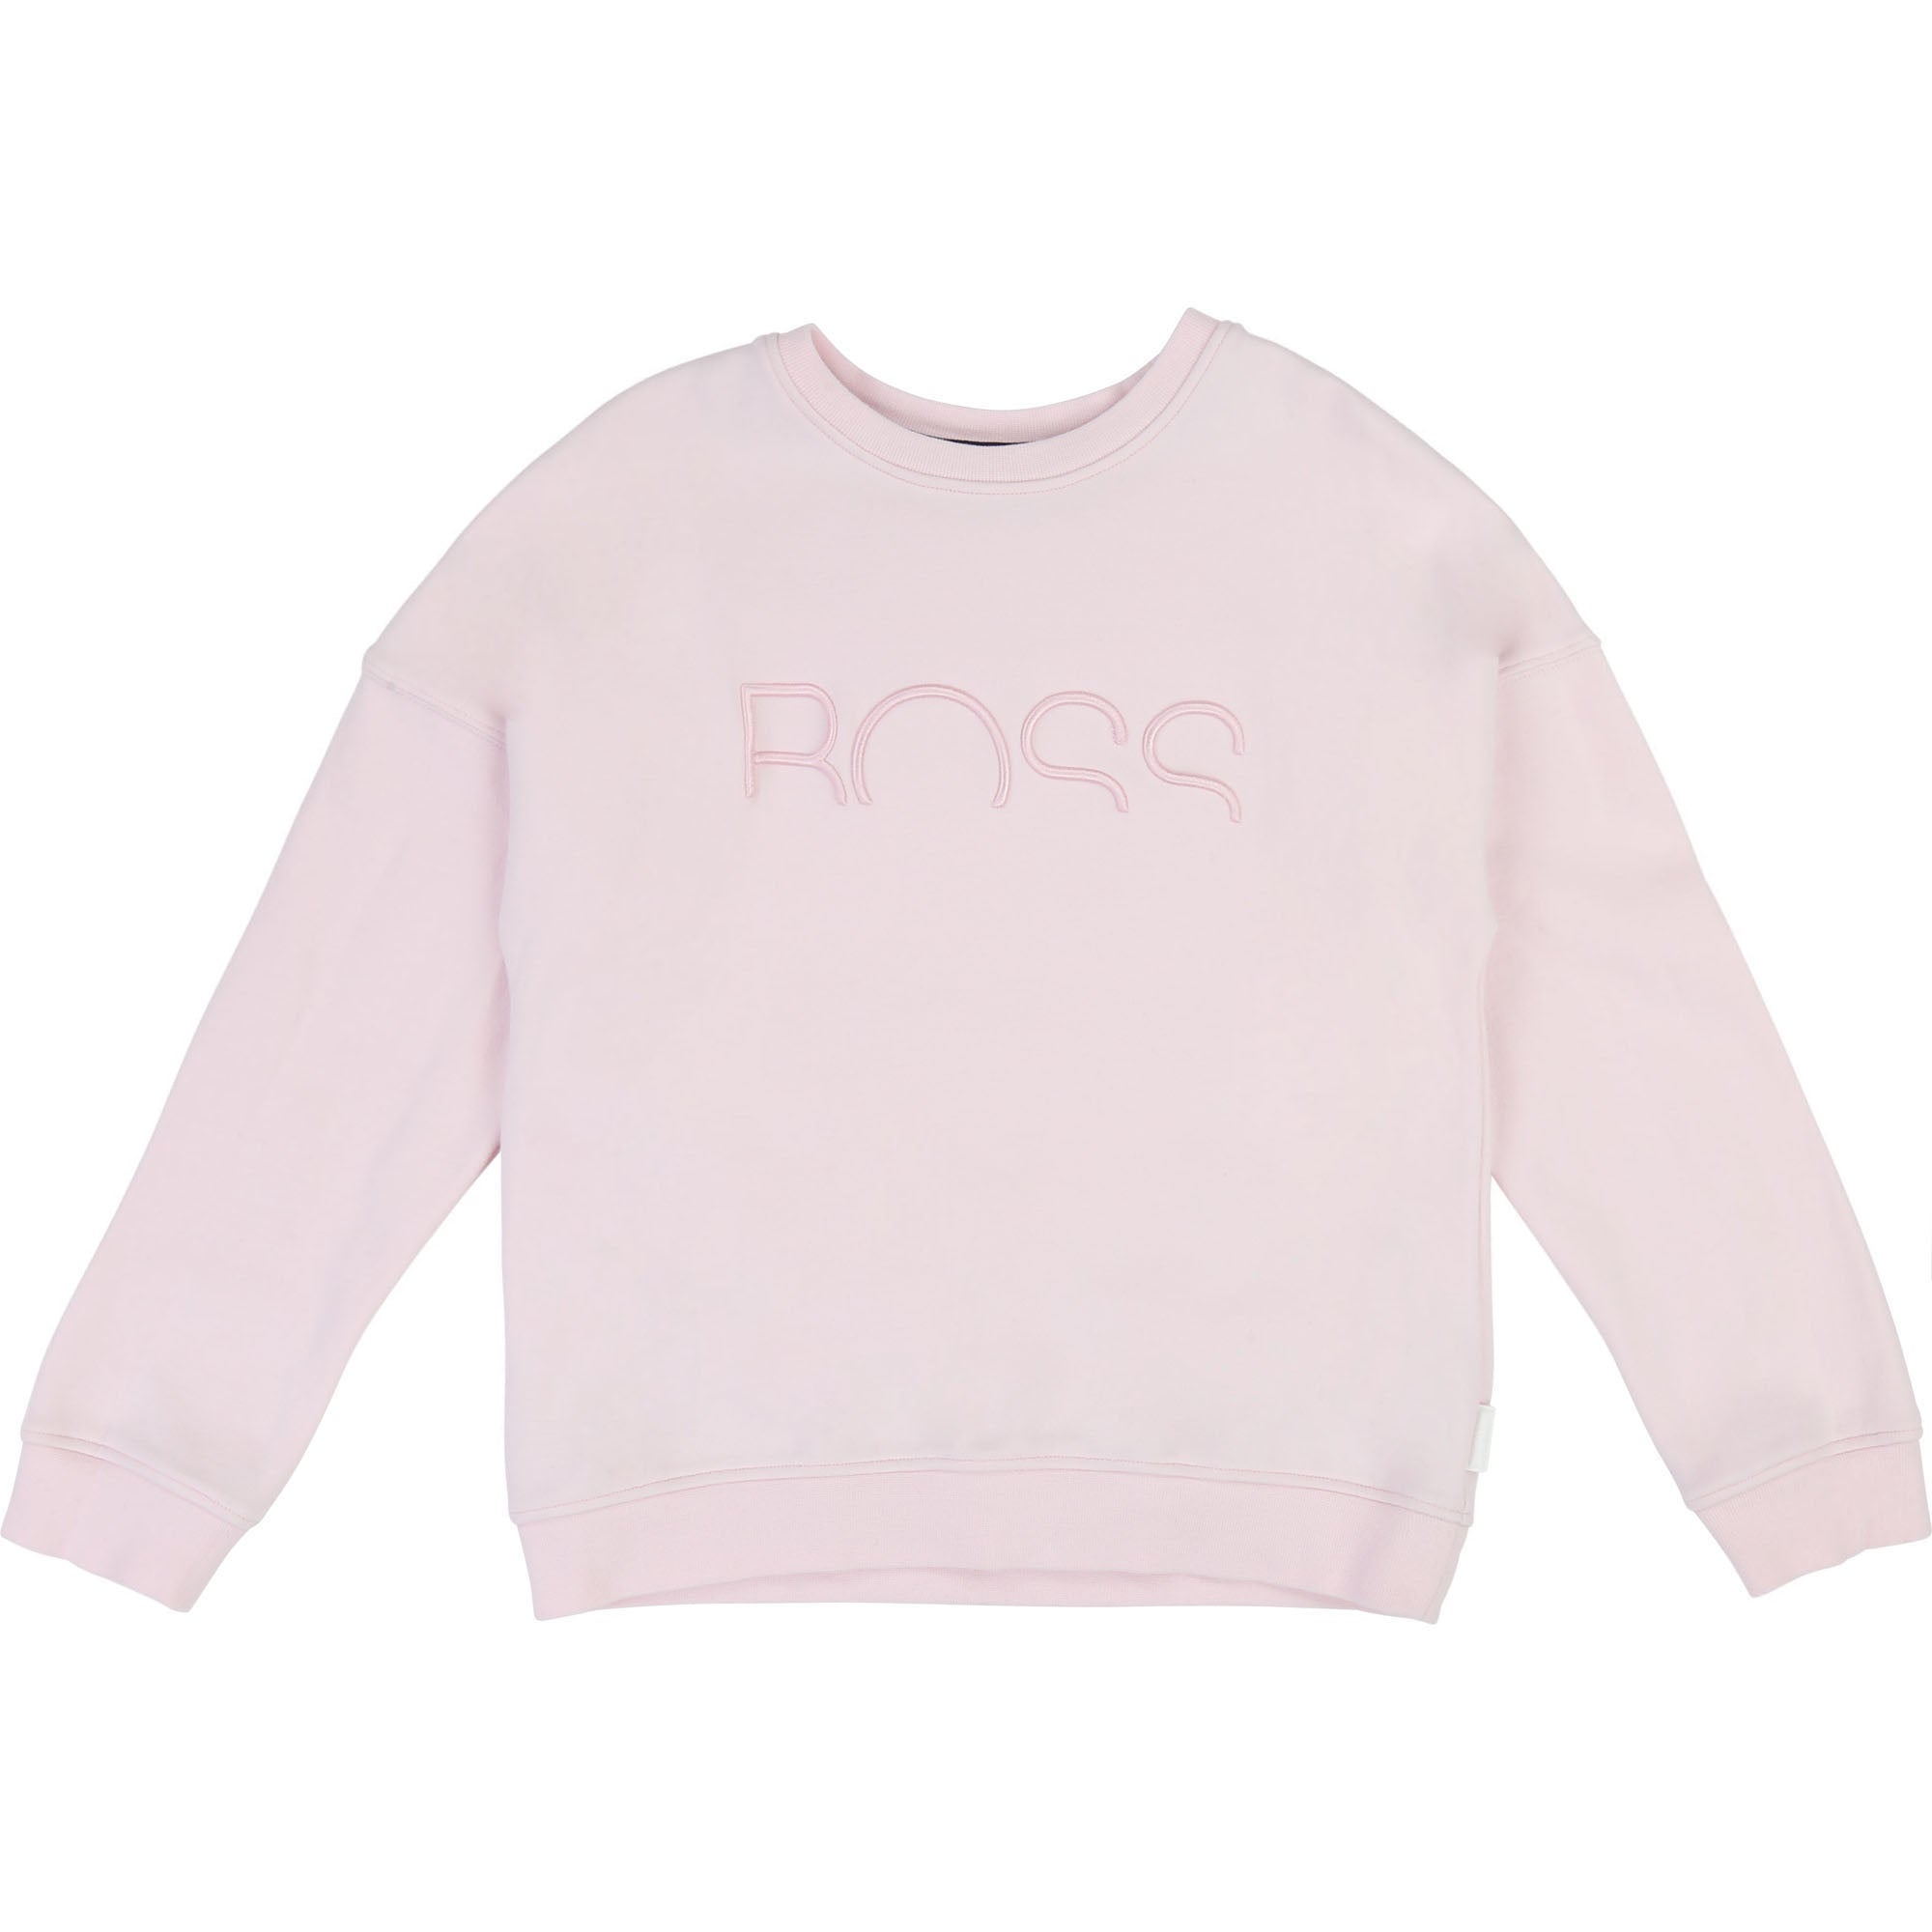 Girls Pale Pink Cotton Sweater